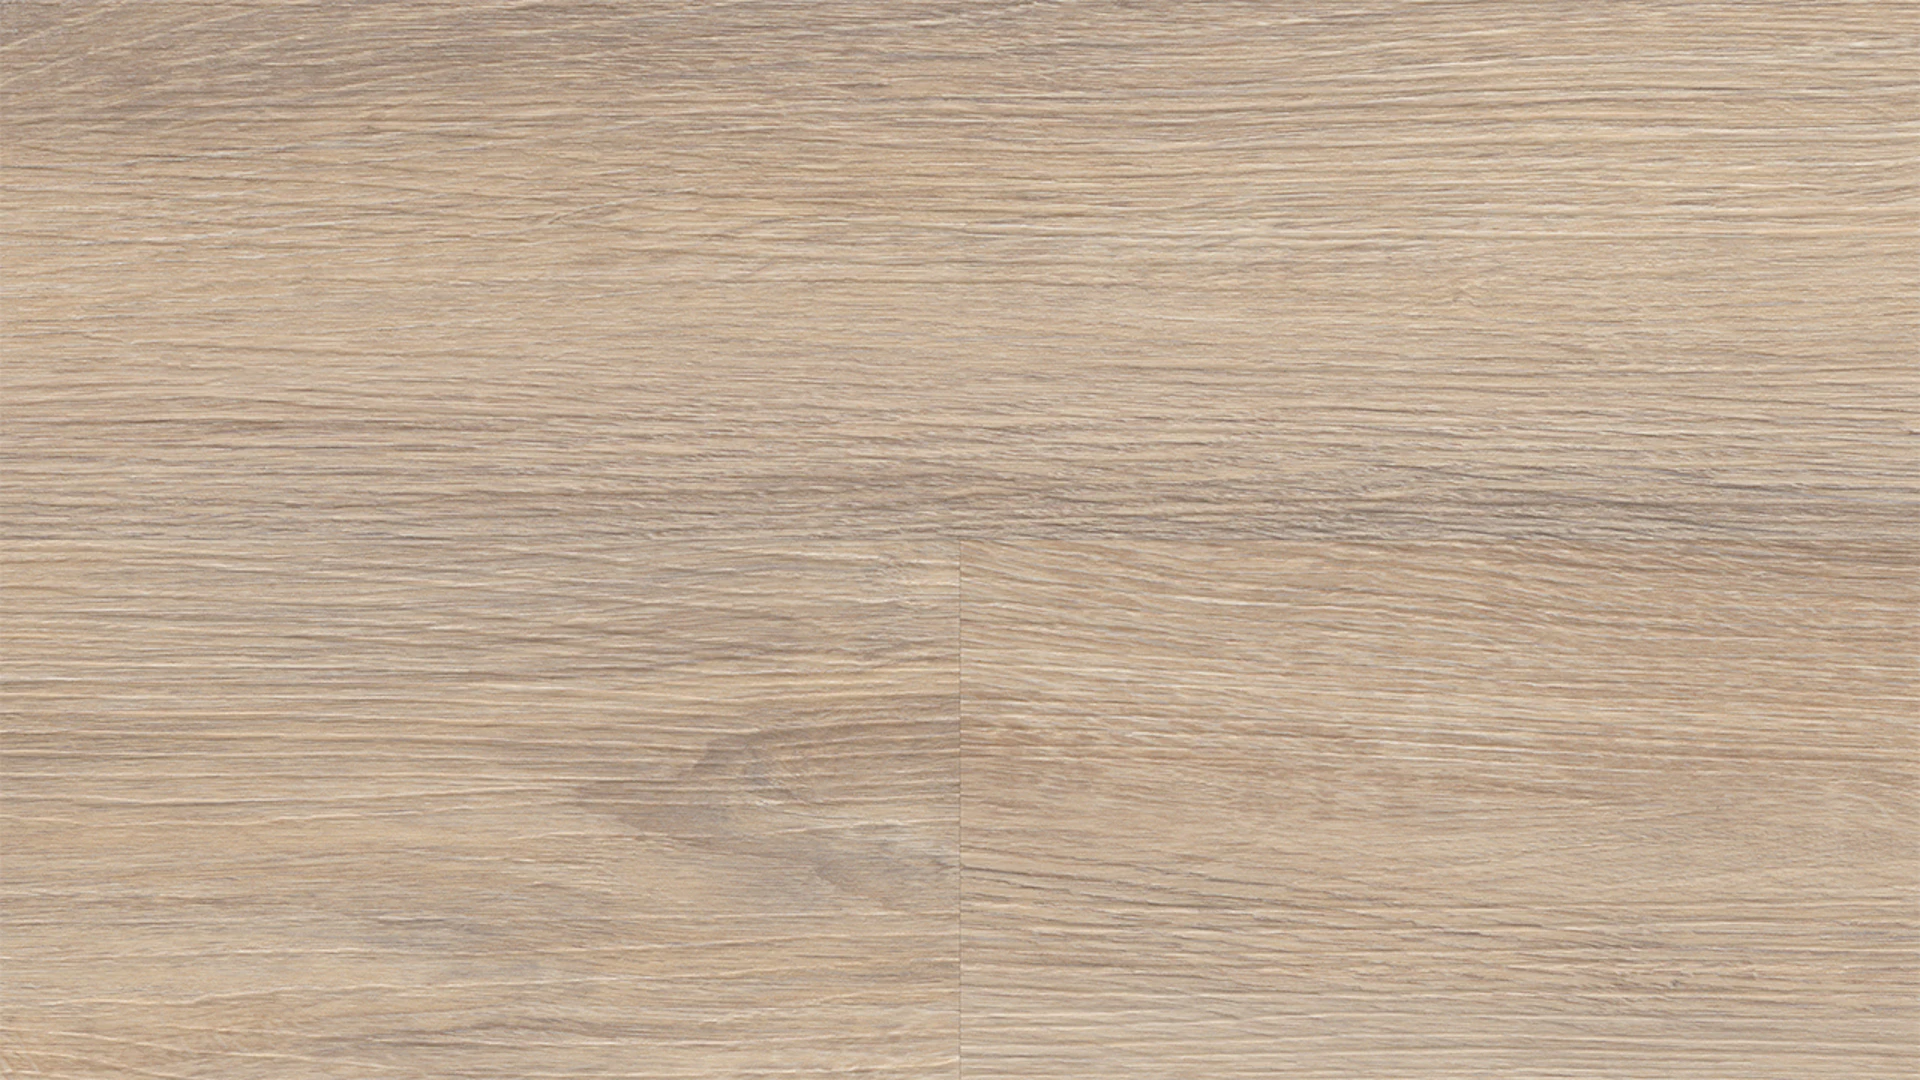 Wineo Klebevinyl - 400 wood L Vibrant Oak Beige | Synchronprägung (DB282WL)